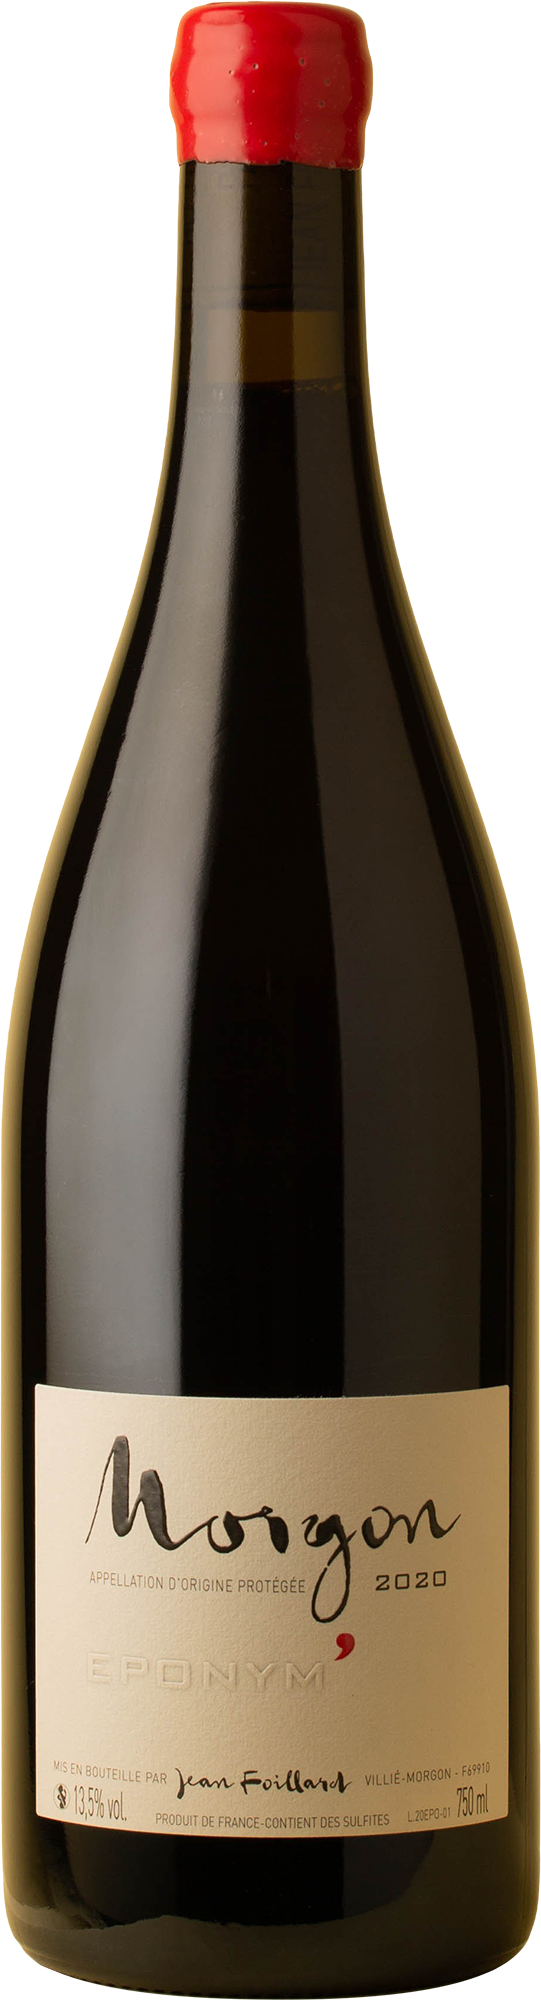 Jean Foillard - Morgon Eponym Charmes Gamay 2020 Red Wine